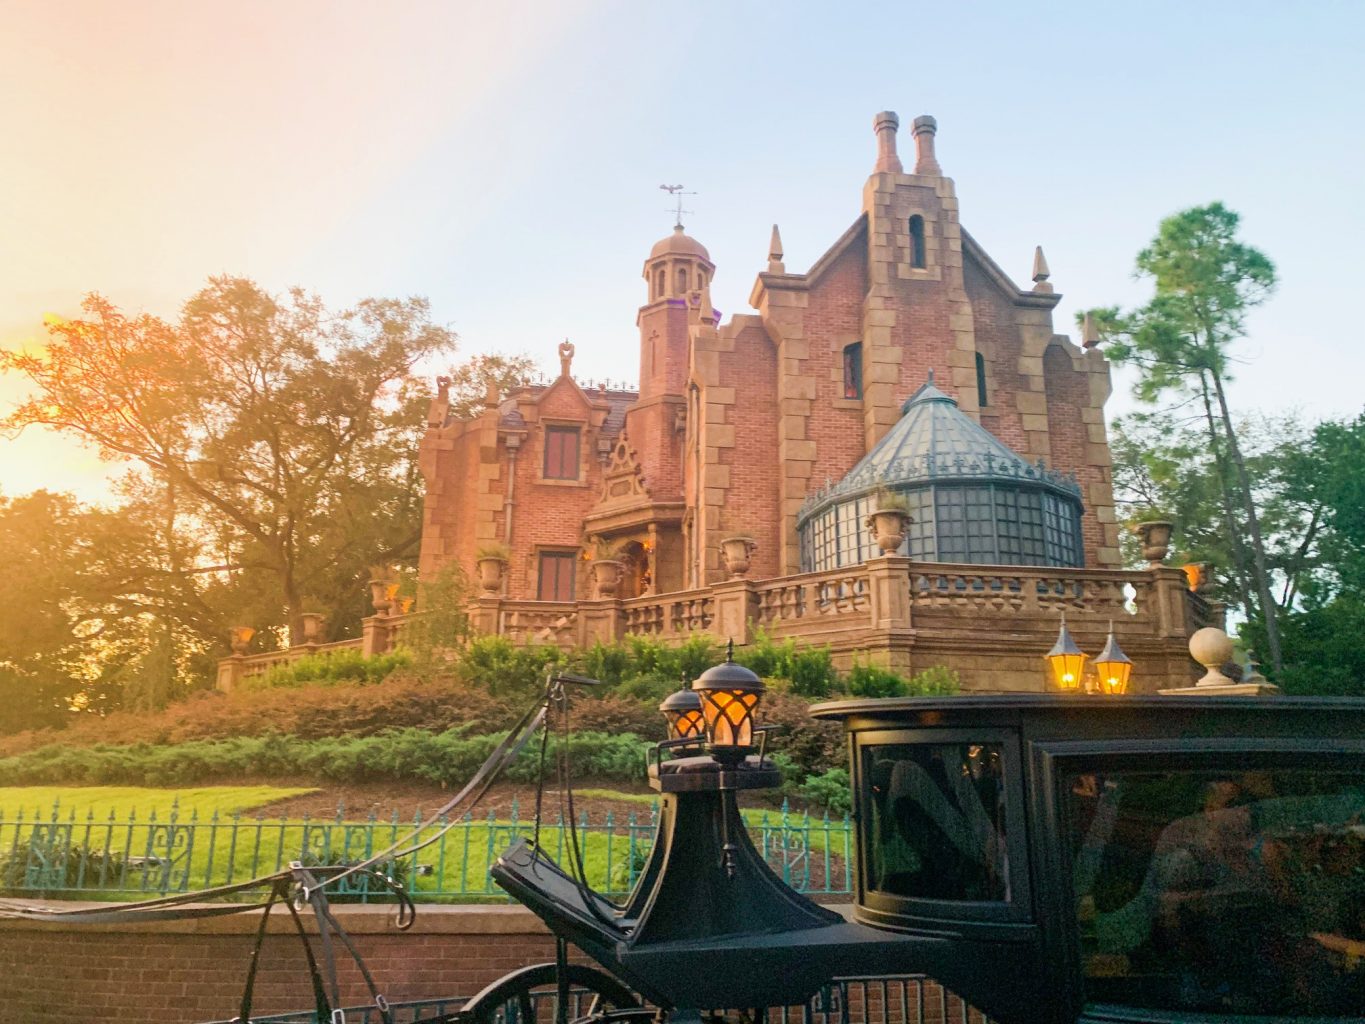 Disney World's Haunted Mansion ride